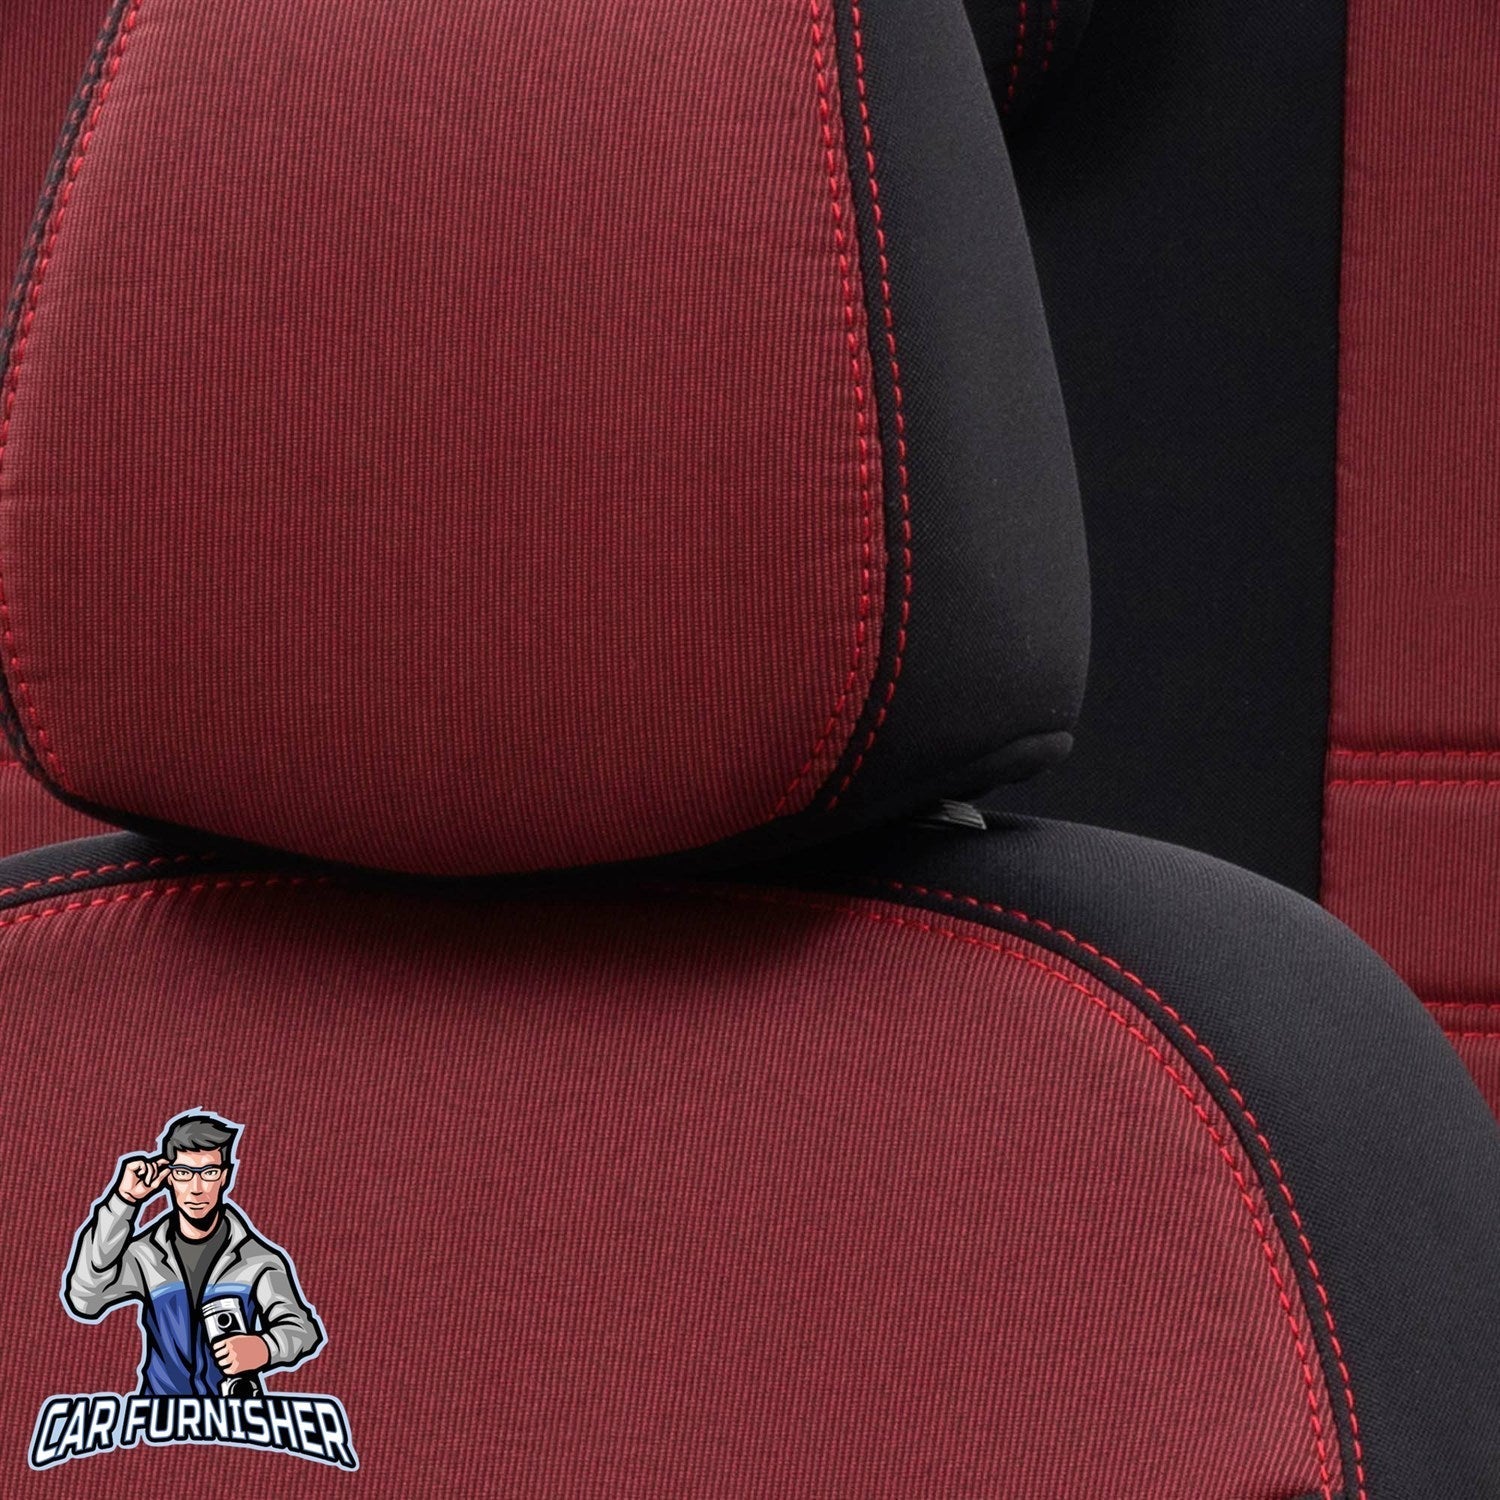 Fiat Ducato Seat Covers Original Jacquard Design Red Jacquard Fabric